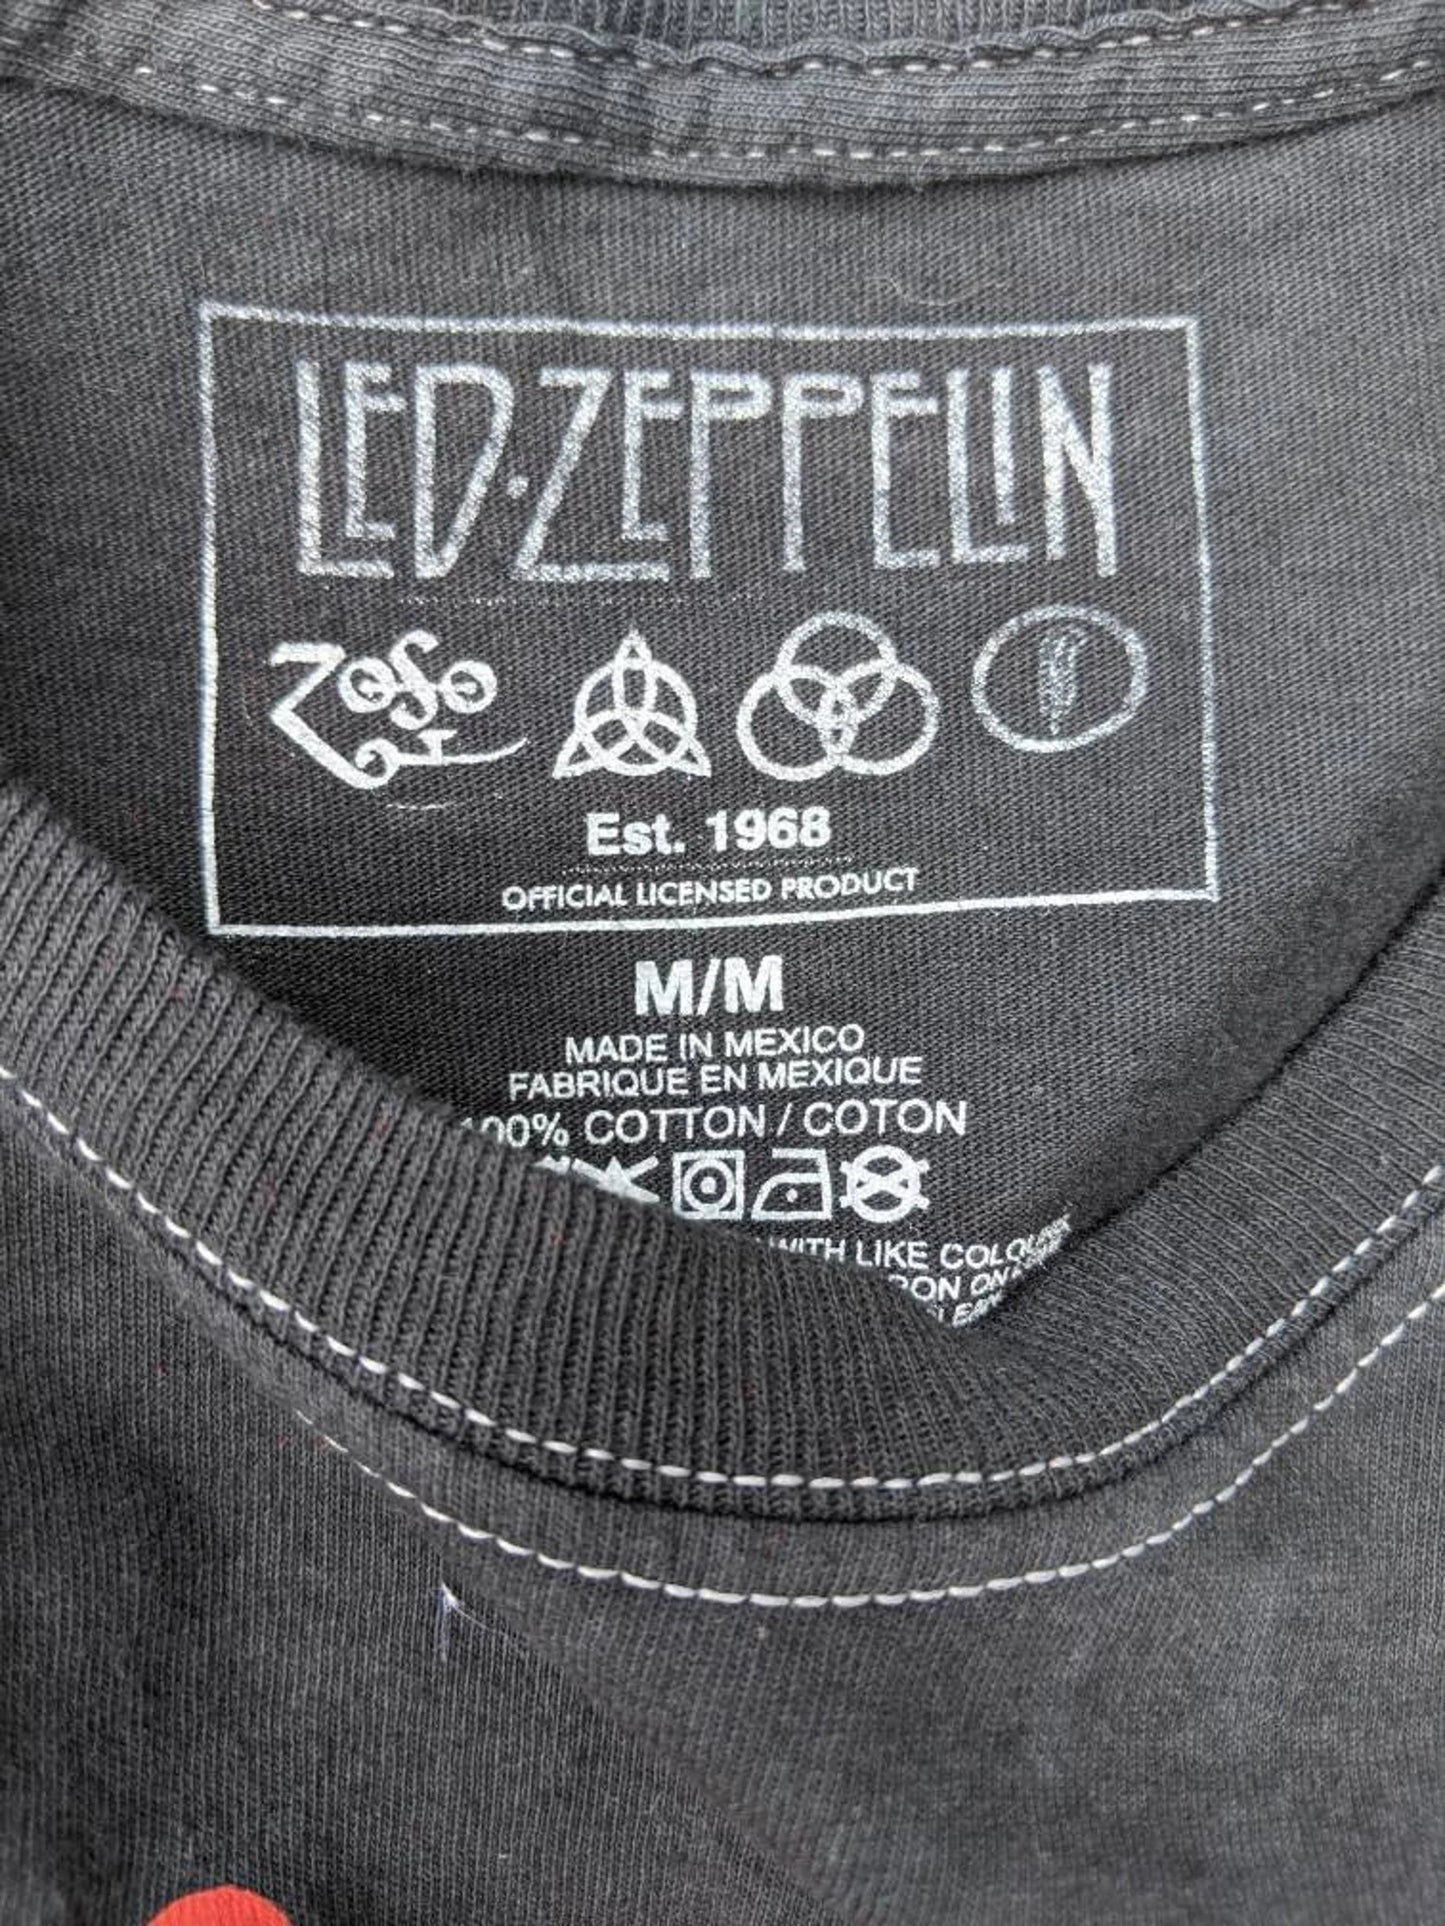 Handmade, Upcycled Led Zeppelin T-Shirt Dress, Vintage Plaid Patterned Fabric Skirt Size M